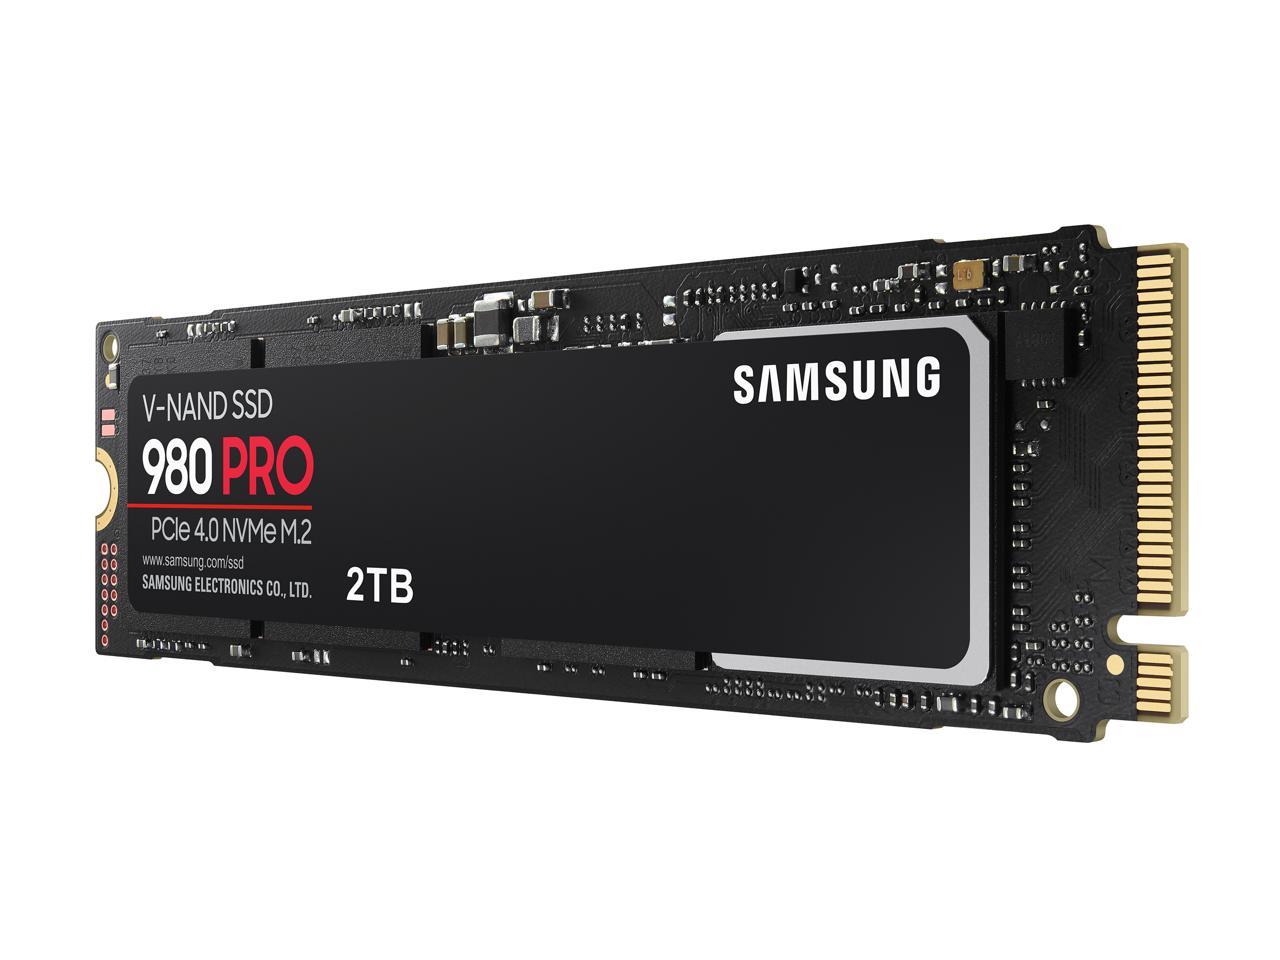 2TB Samsung 980 Pro NVMe Gen4 SSD $145